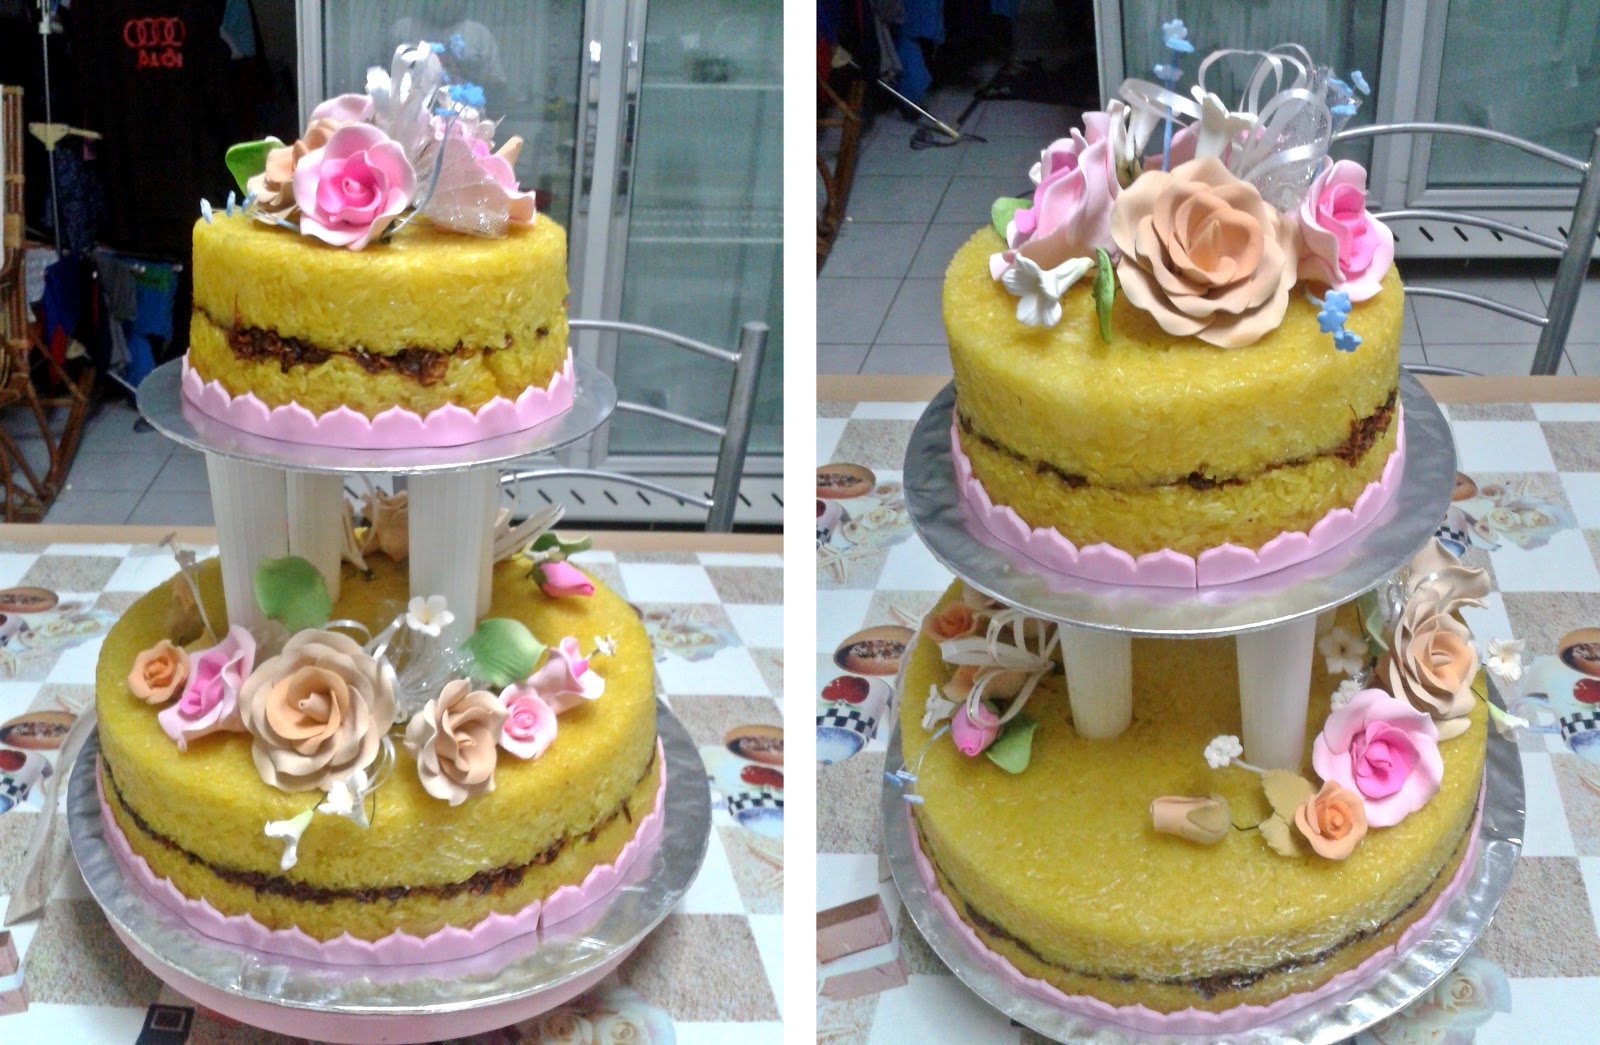 Cantik Cupcake: PULUT KUNING 2 TINGKAT BERHIAS BUNGA GULA